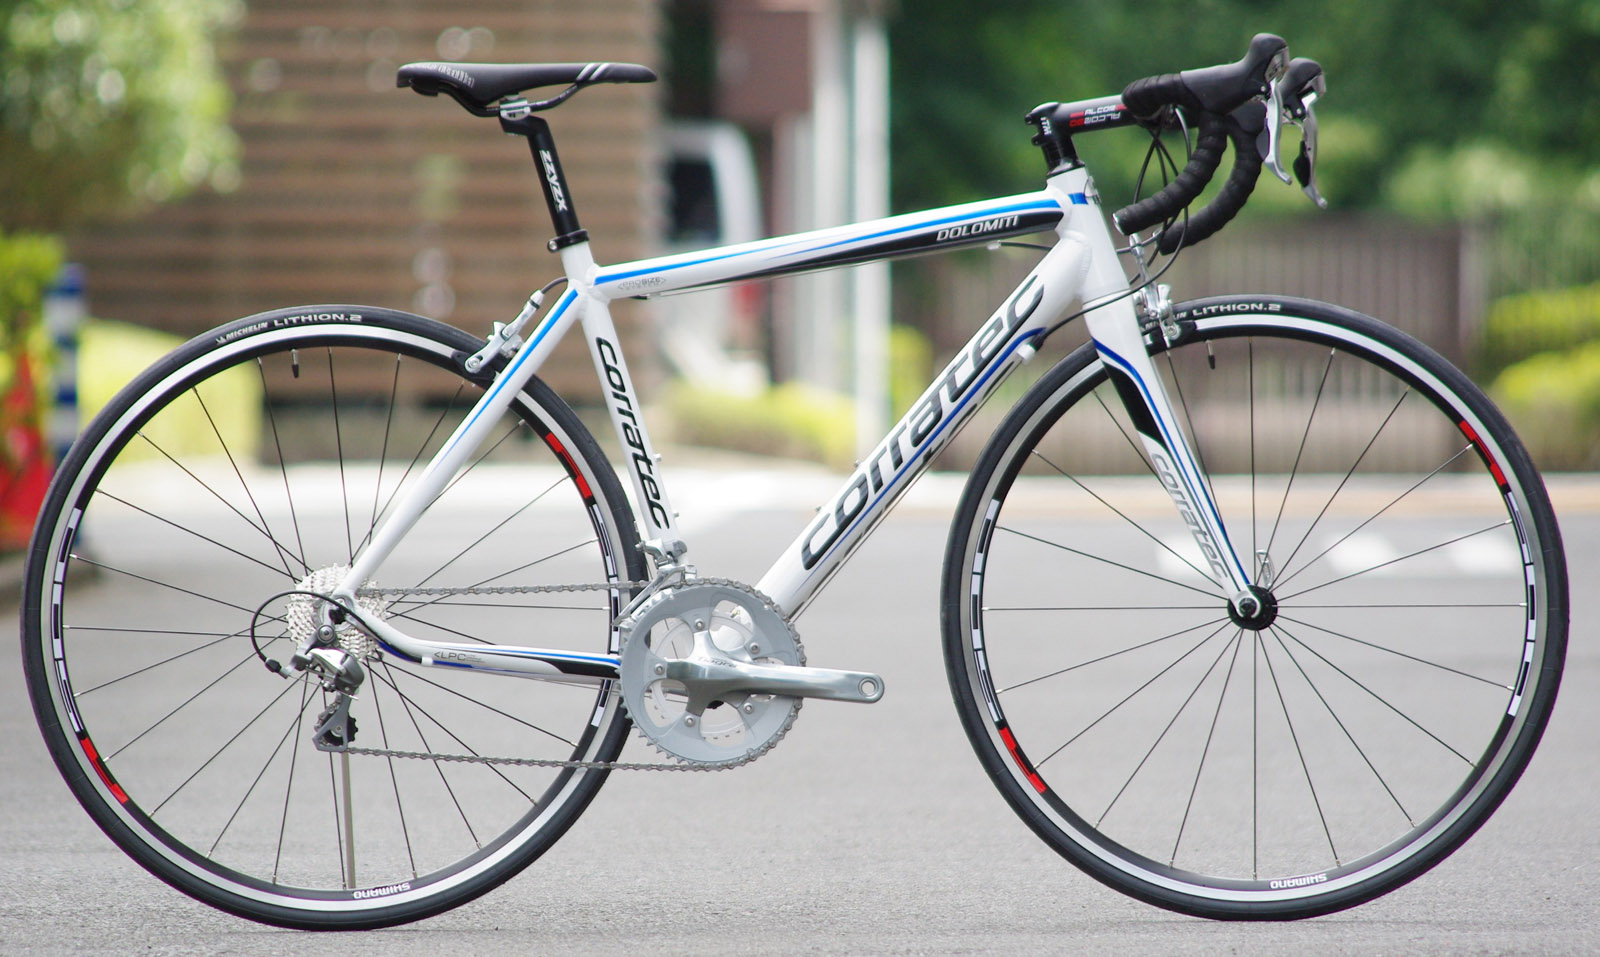 2014 CORRATEC DOLOMITI 発売のお知らせ : cycle sports